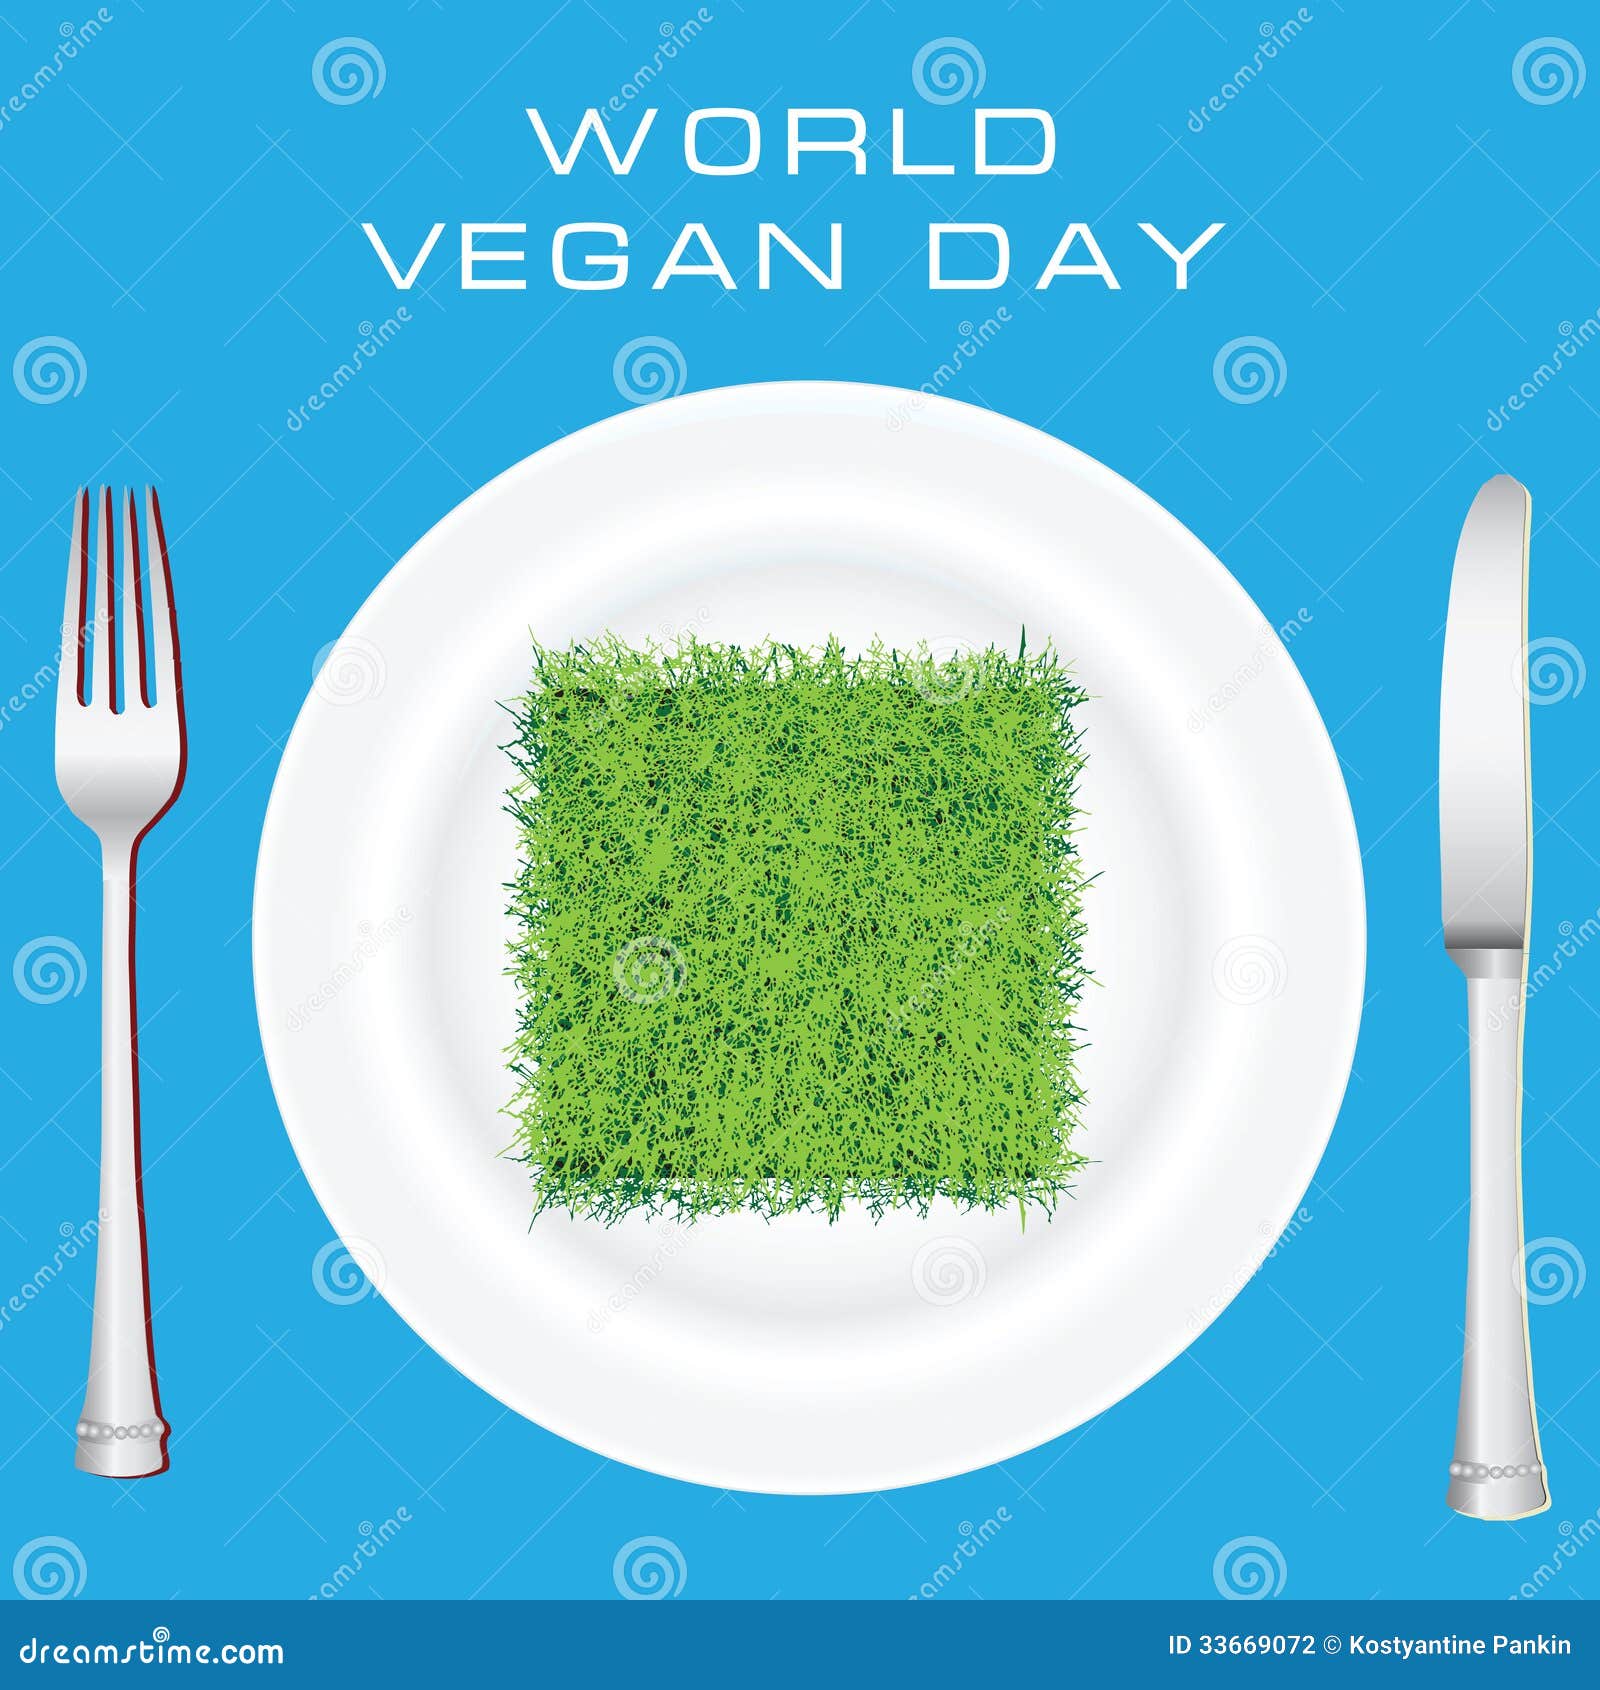 world-vegan-day-poster-dedicated-to-international-vector-illustration-33669072.jpg